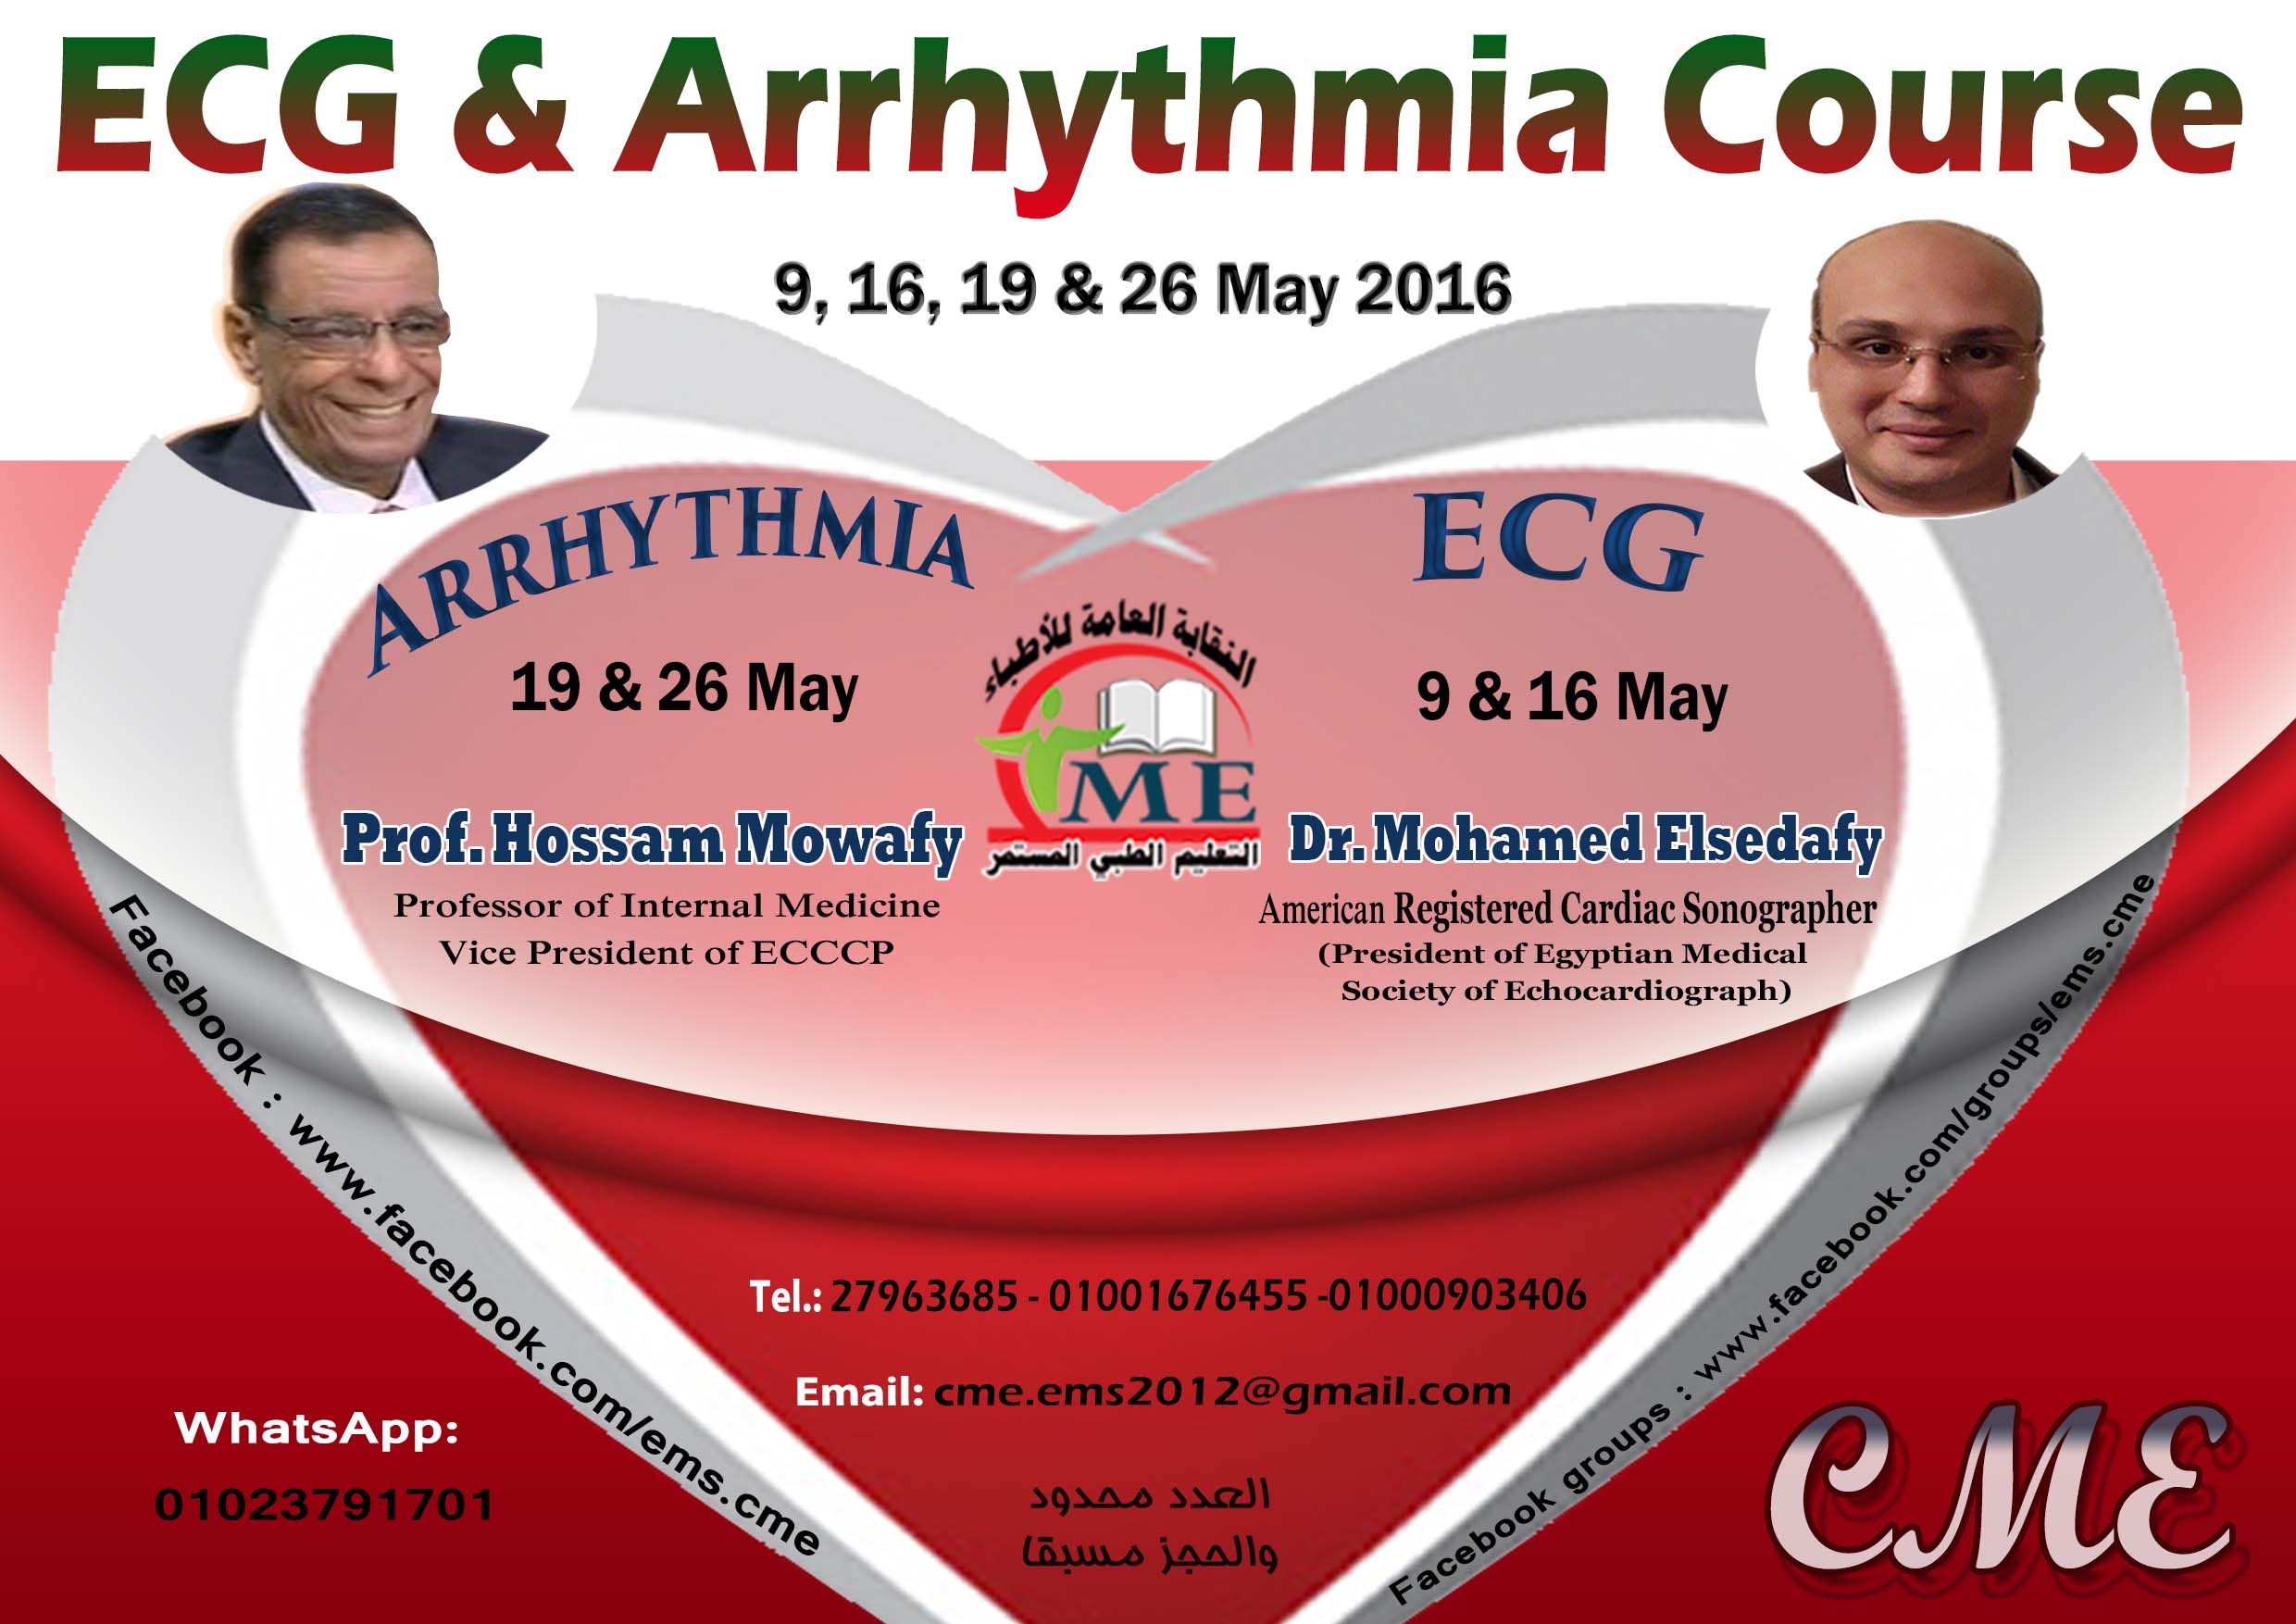 ECG & Arrhythmia Course